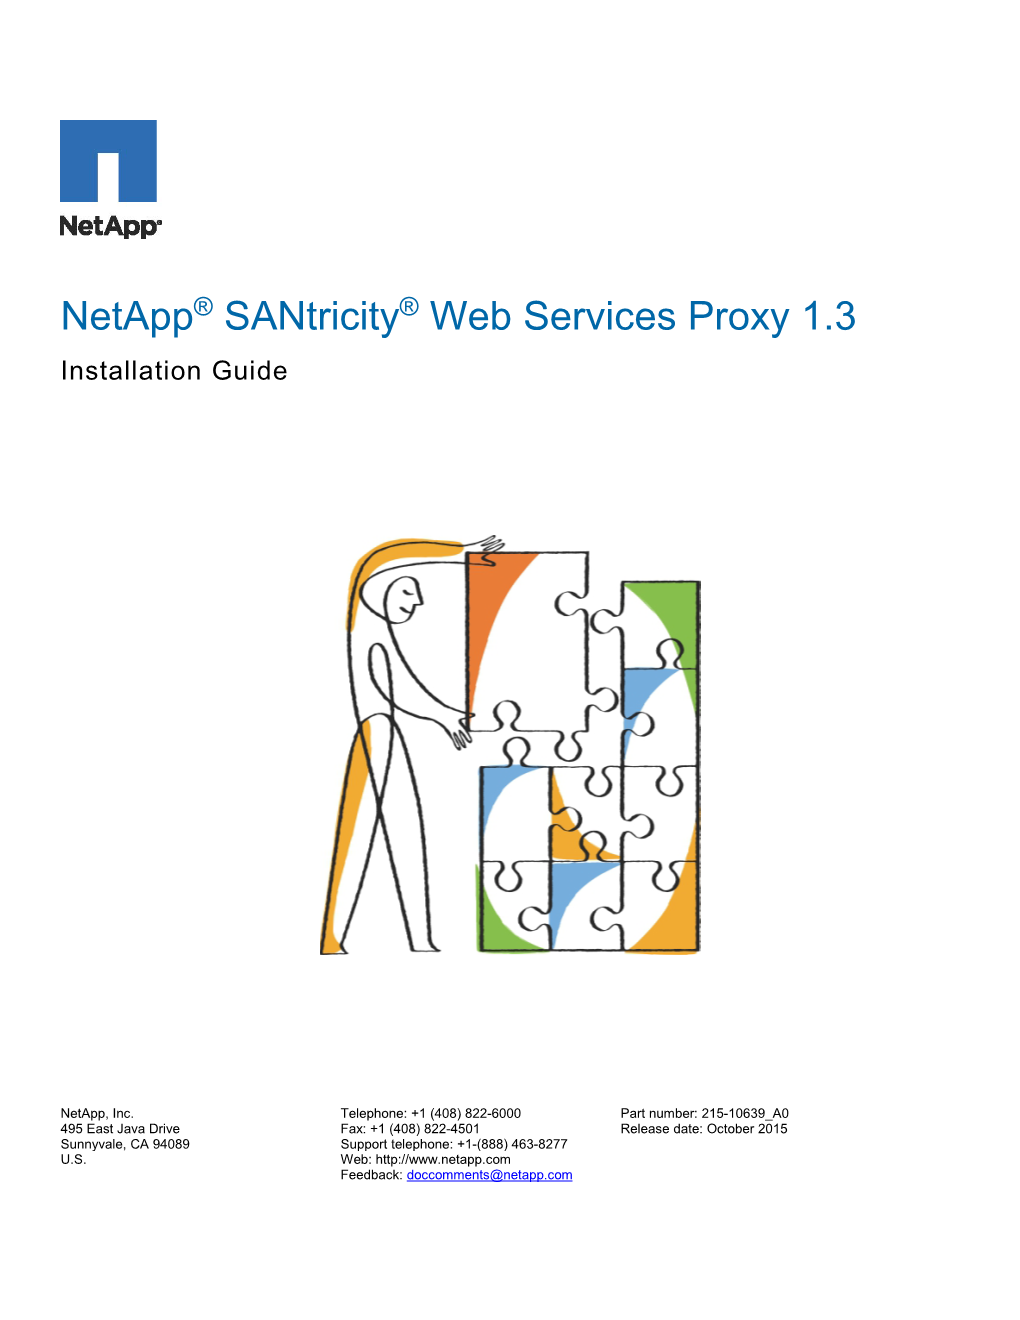 Netapp Santricty Web Services Proxy 1.3 Install Guide